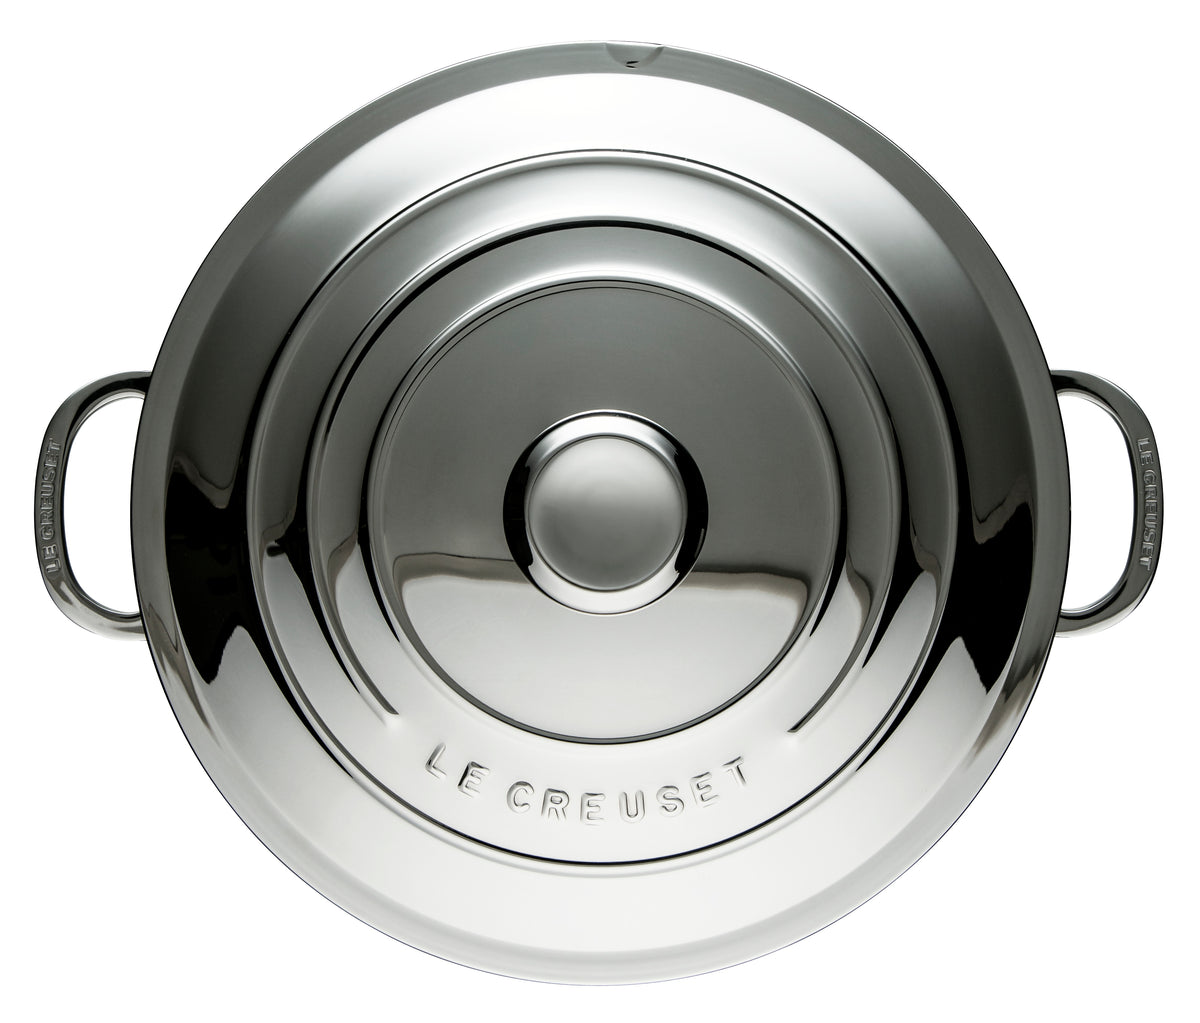 Le Creuset Premium Stainless Steel Casserole With Lid, 4 Quart